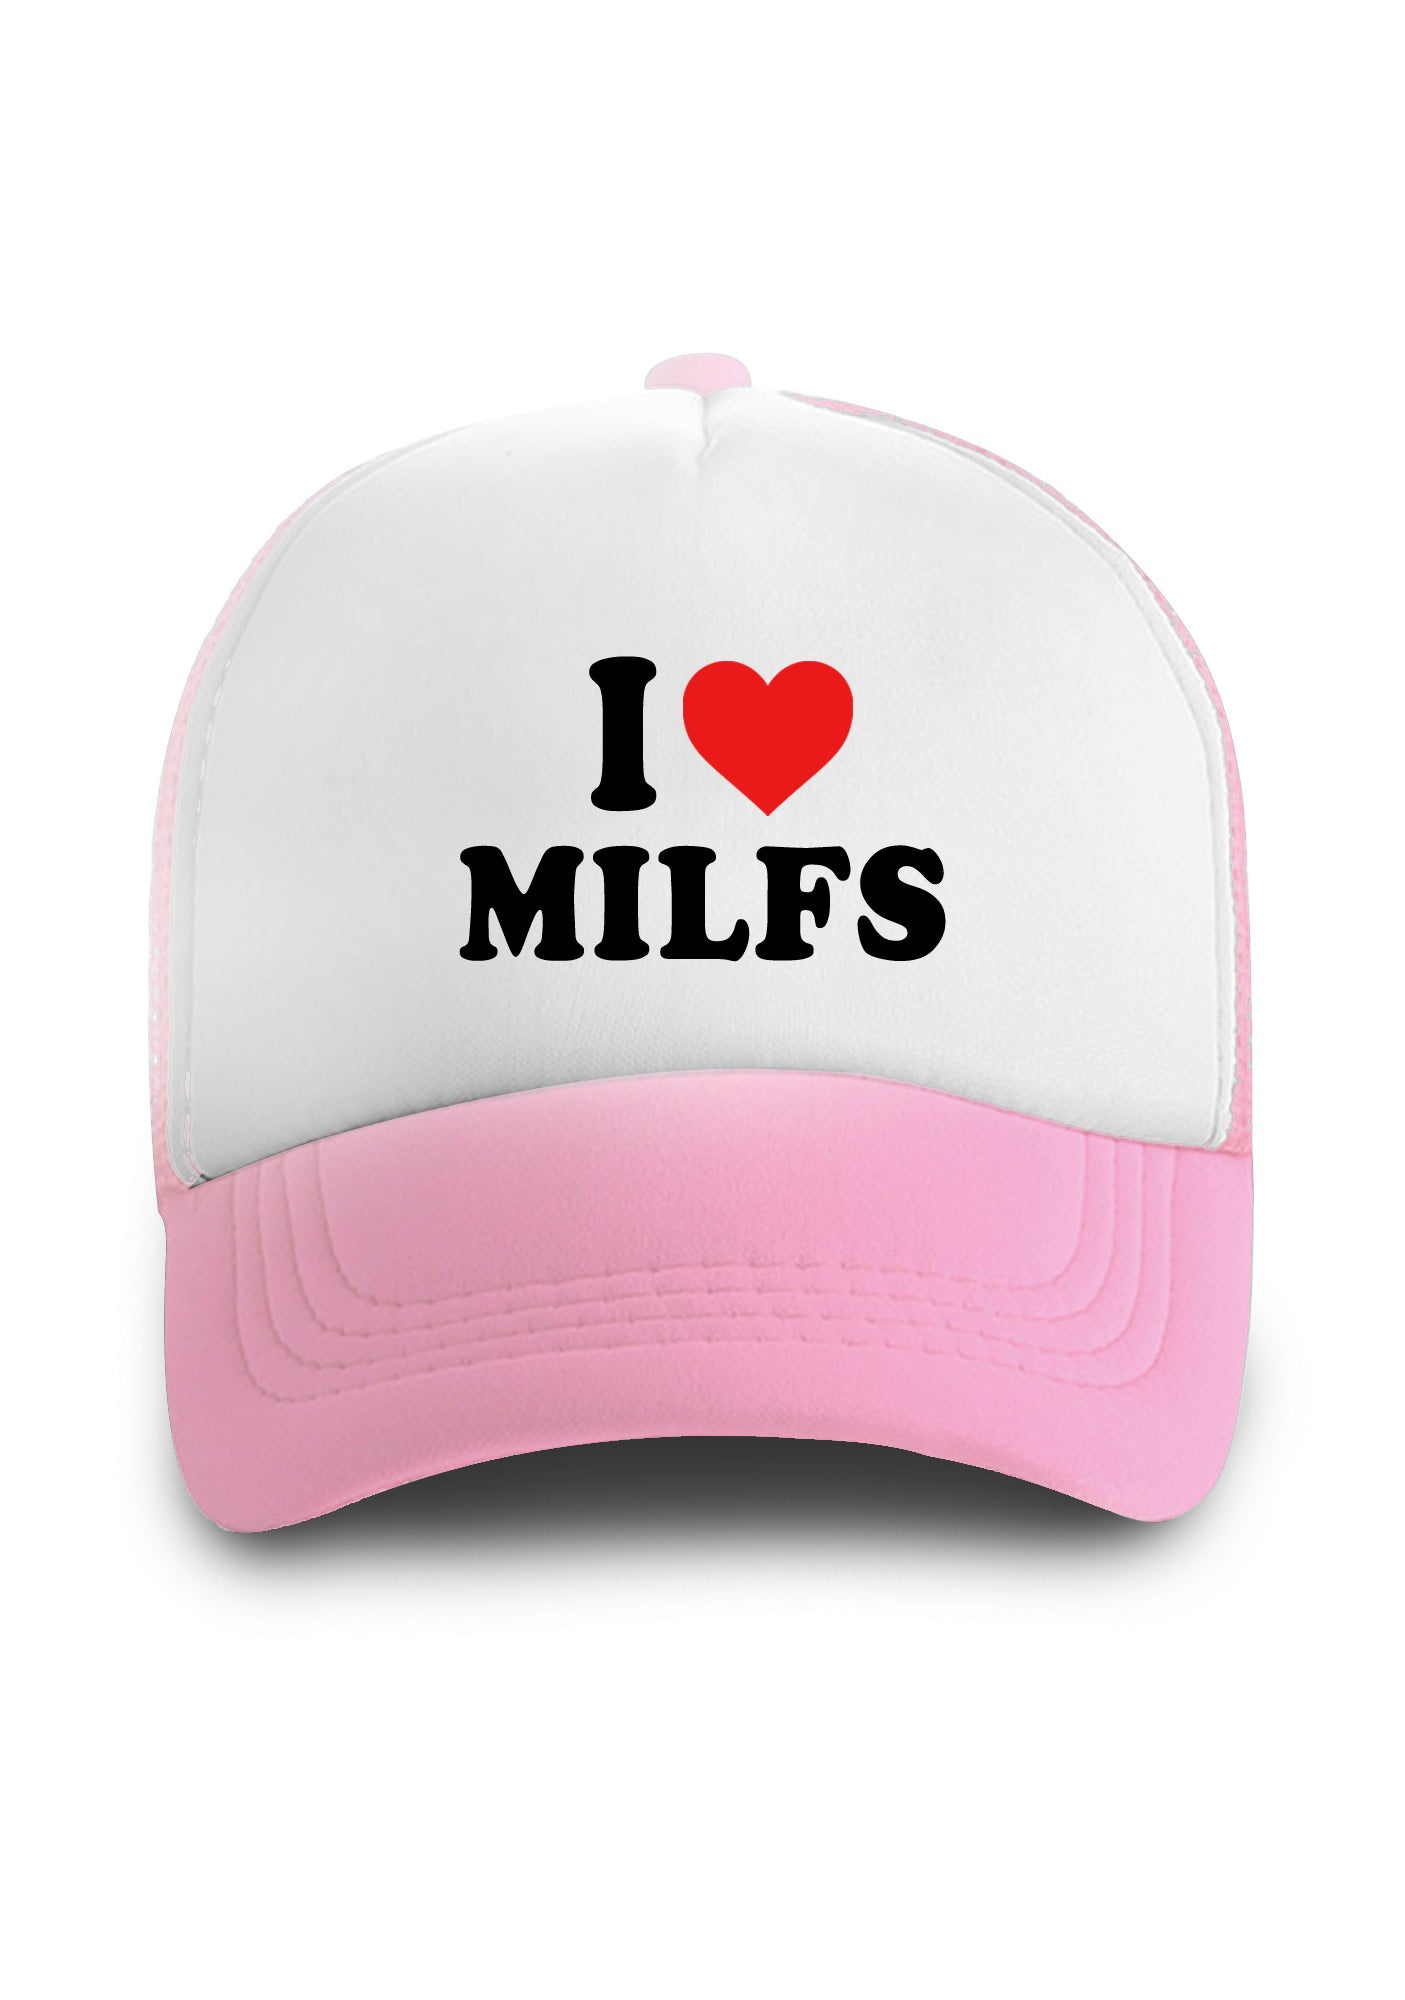 I Love Mxxfs Trucker Hat